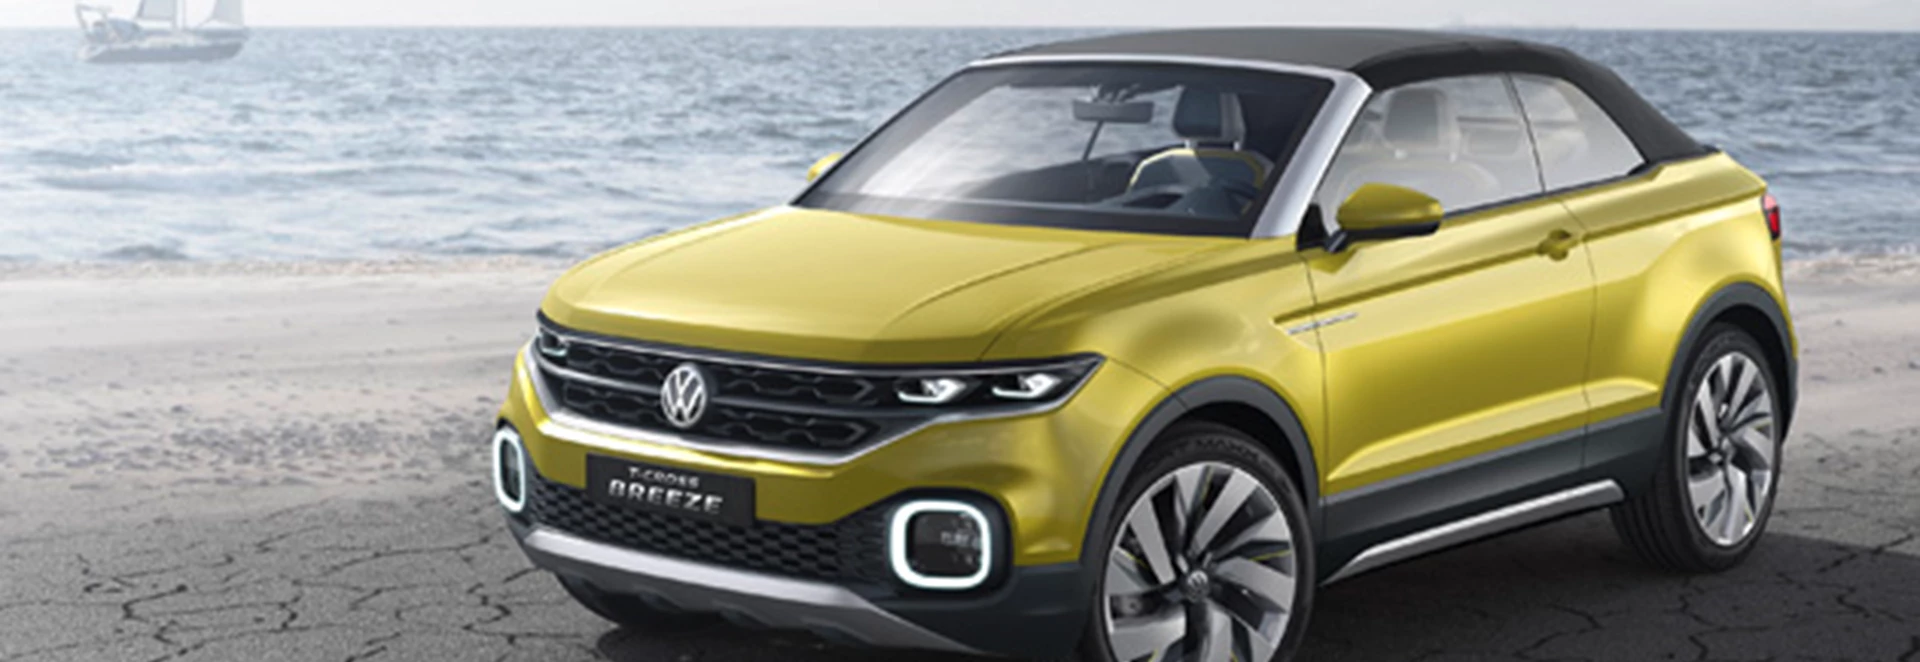 New Volkswagen mini-SUV will rival Juke and Captur in 2018 